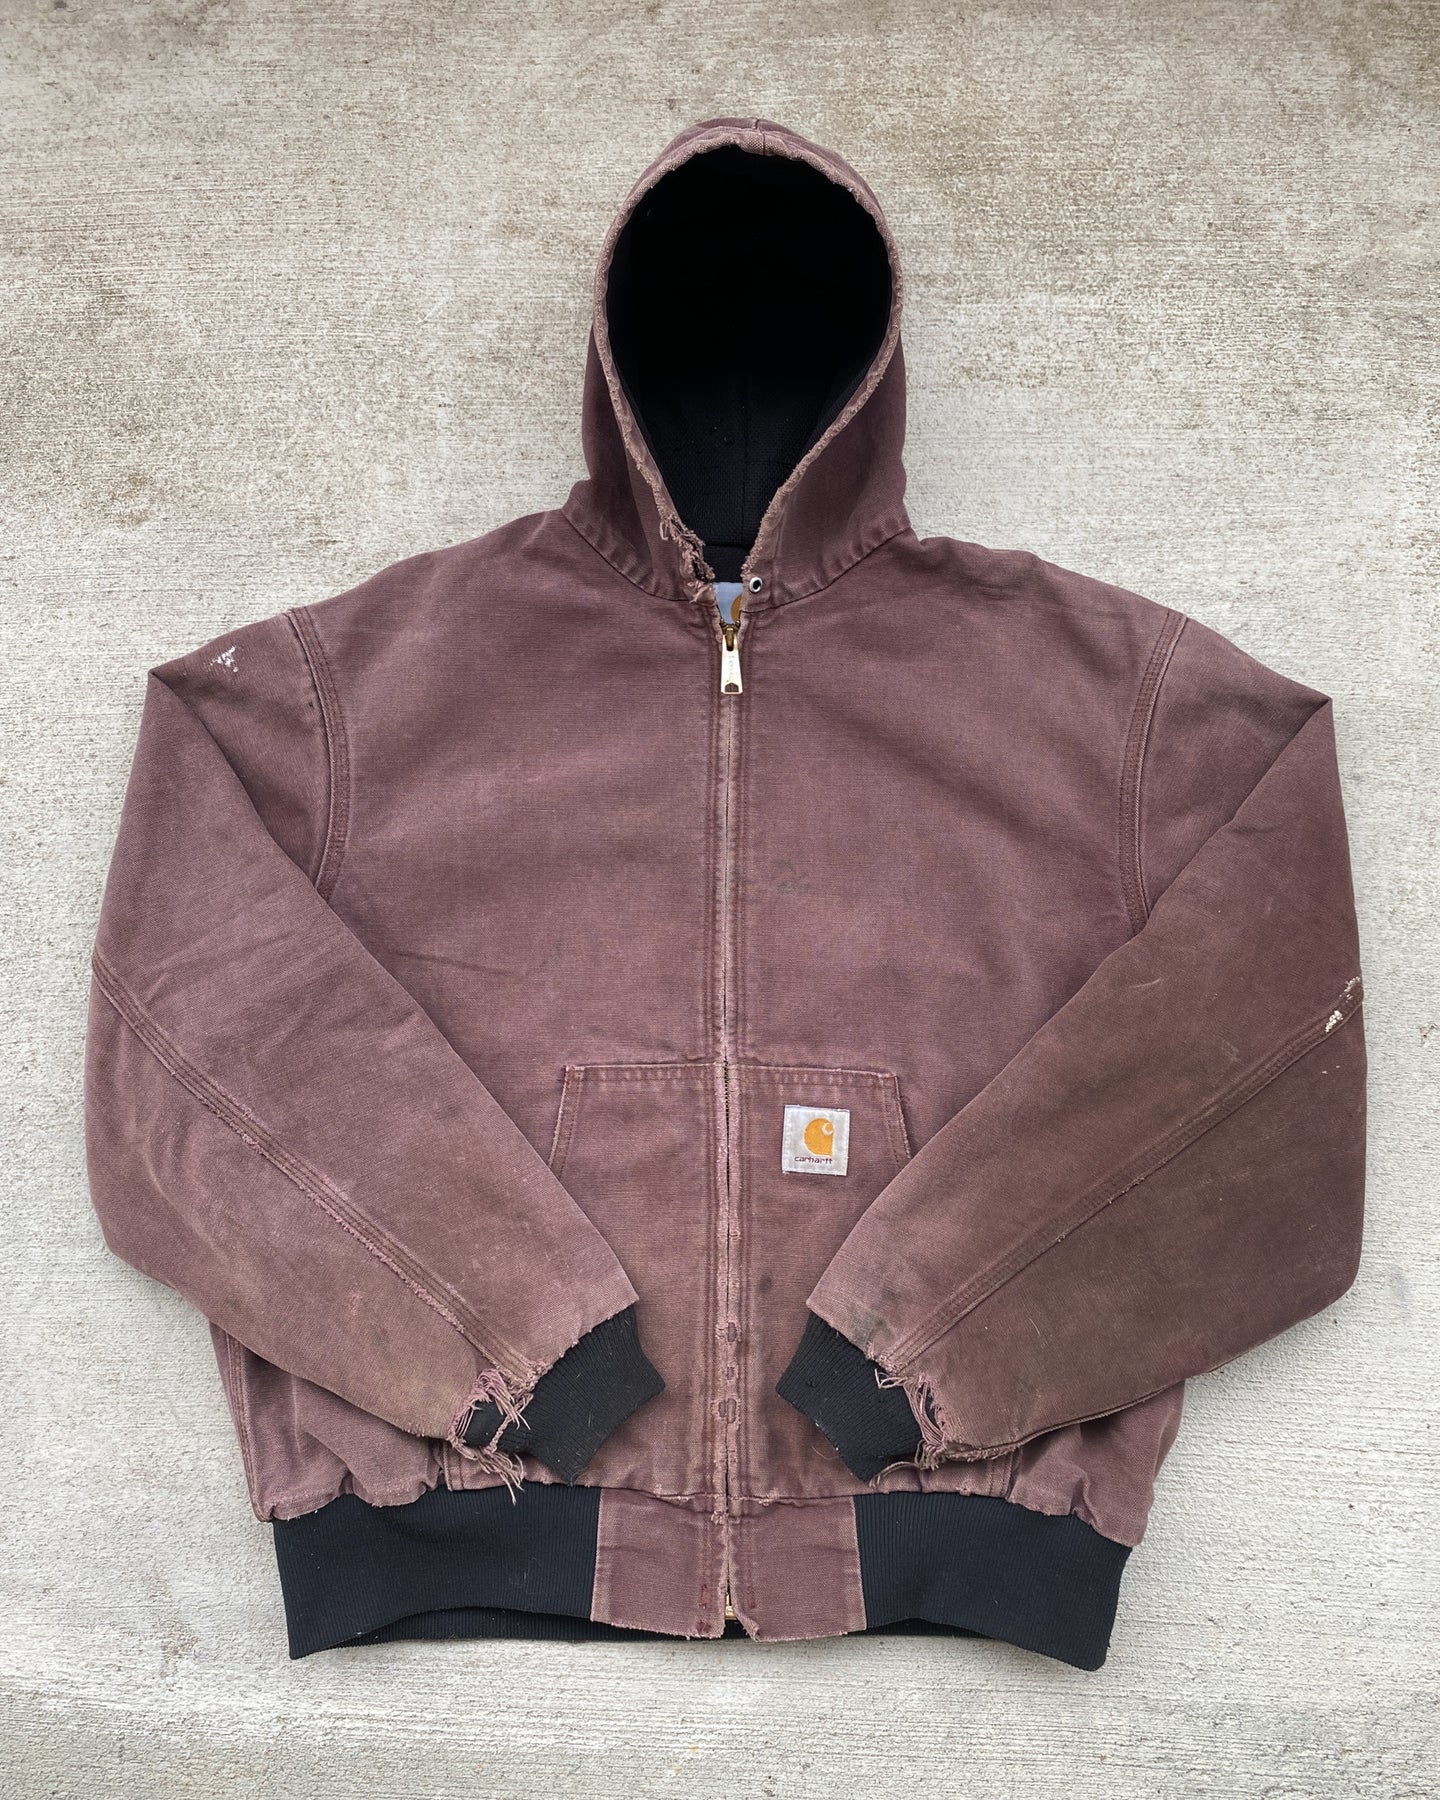 1990s Carhartt Plum Hooded Work Jacket - Size Large